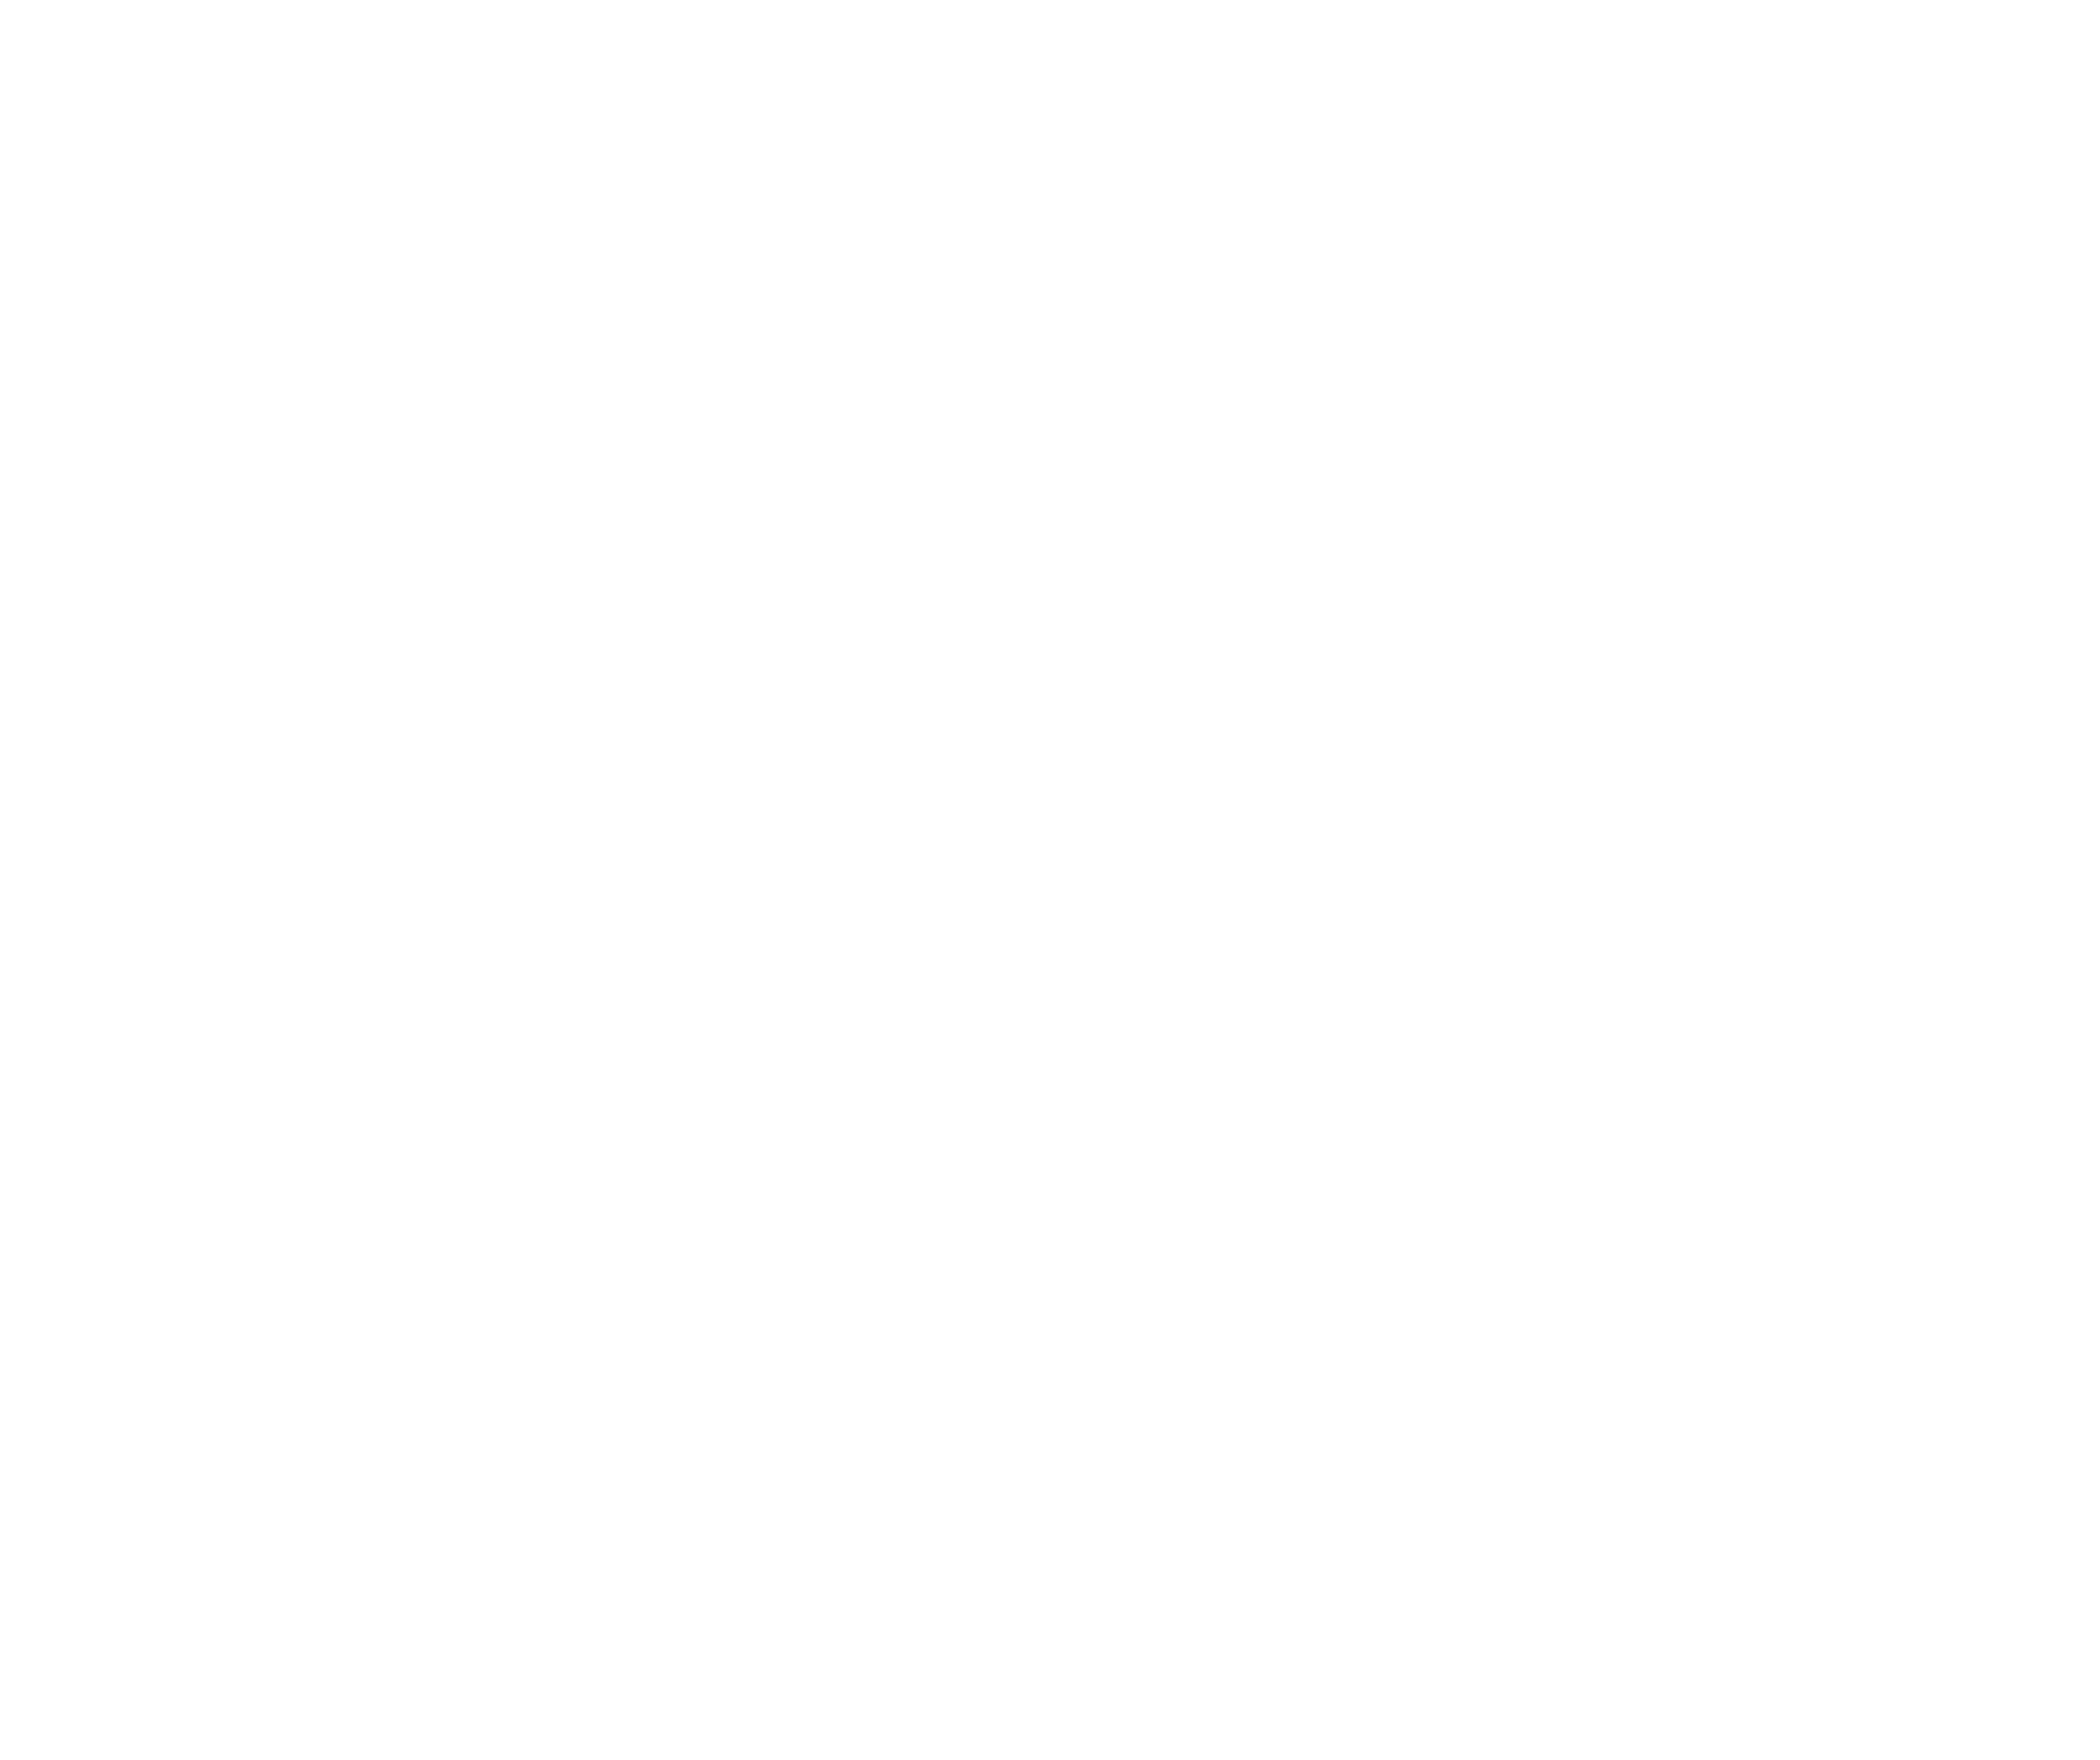 EMAC Stockton